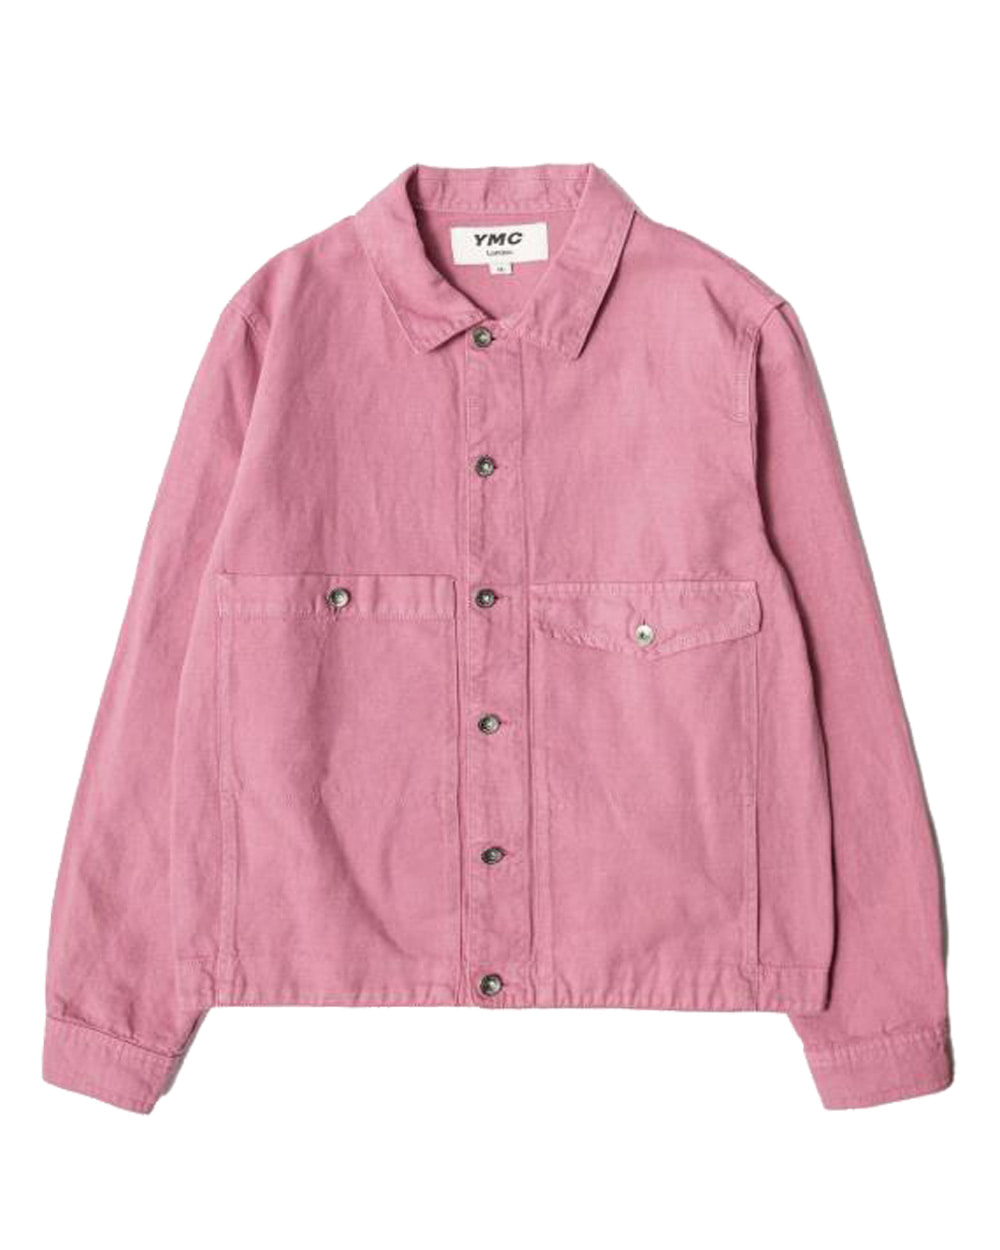 YMC Pinkley Jacket (Pink)